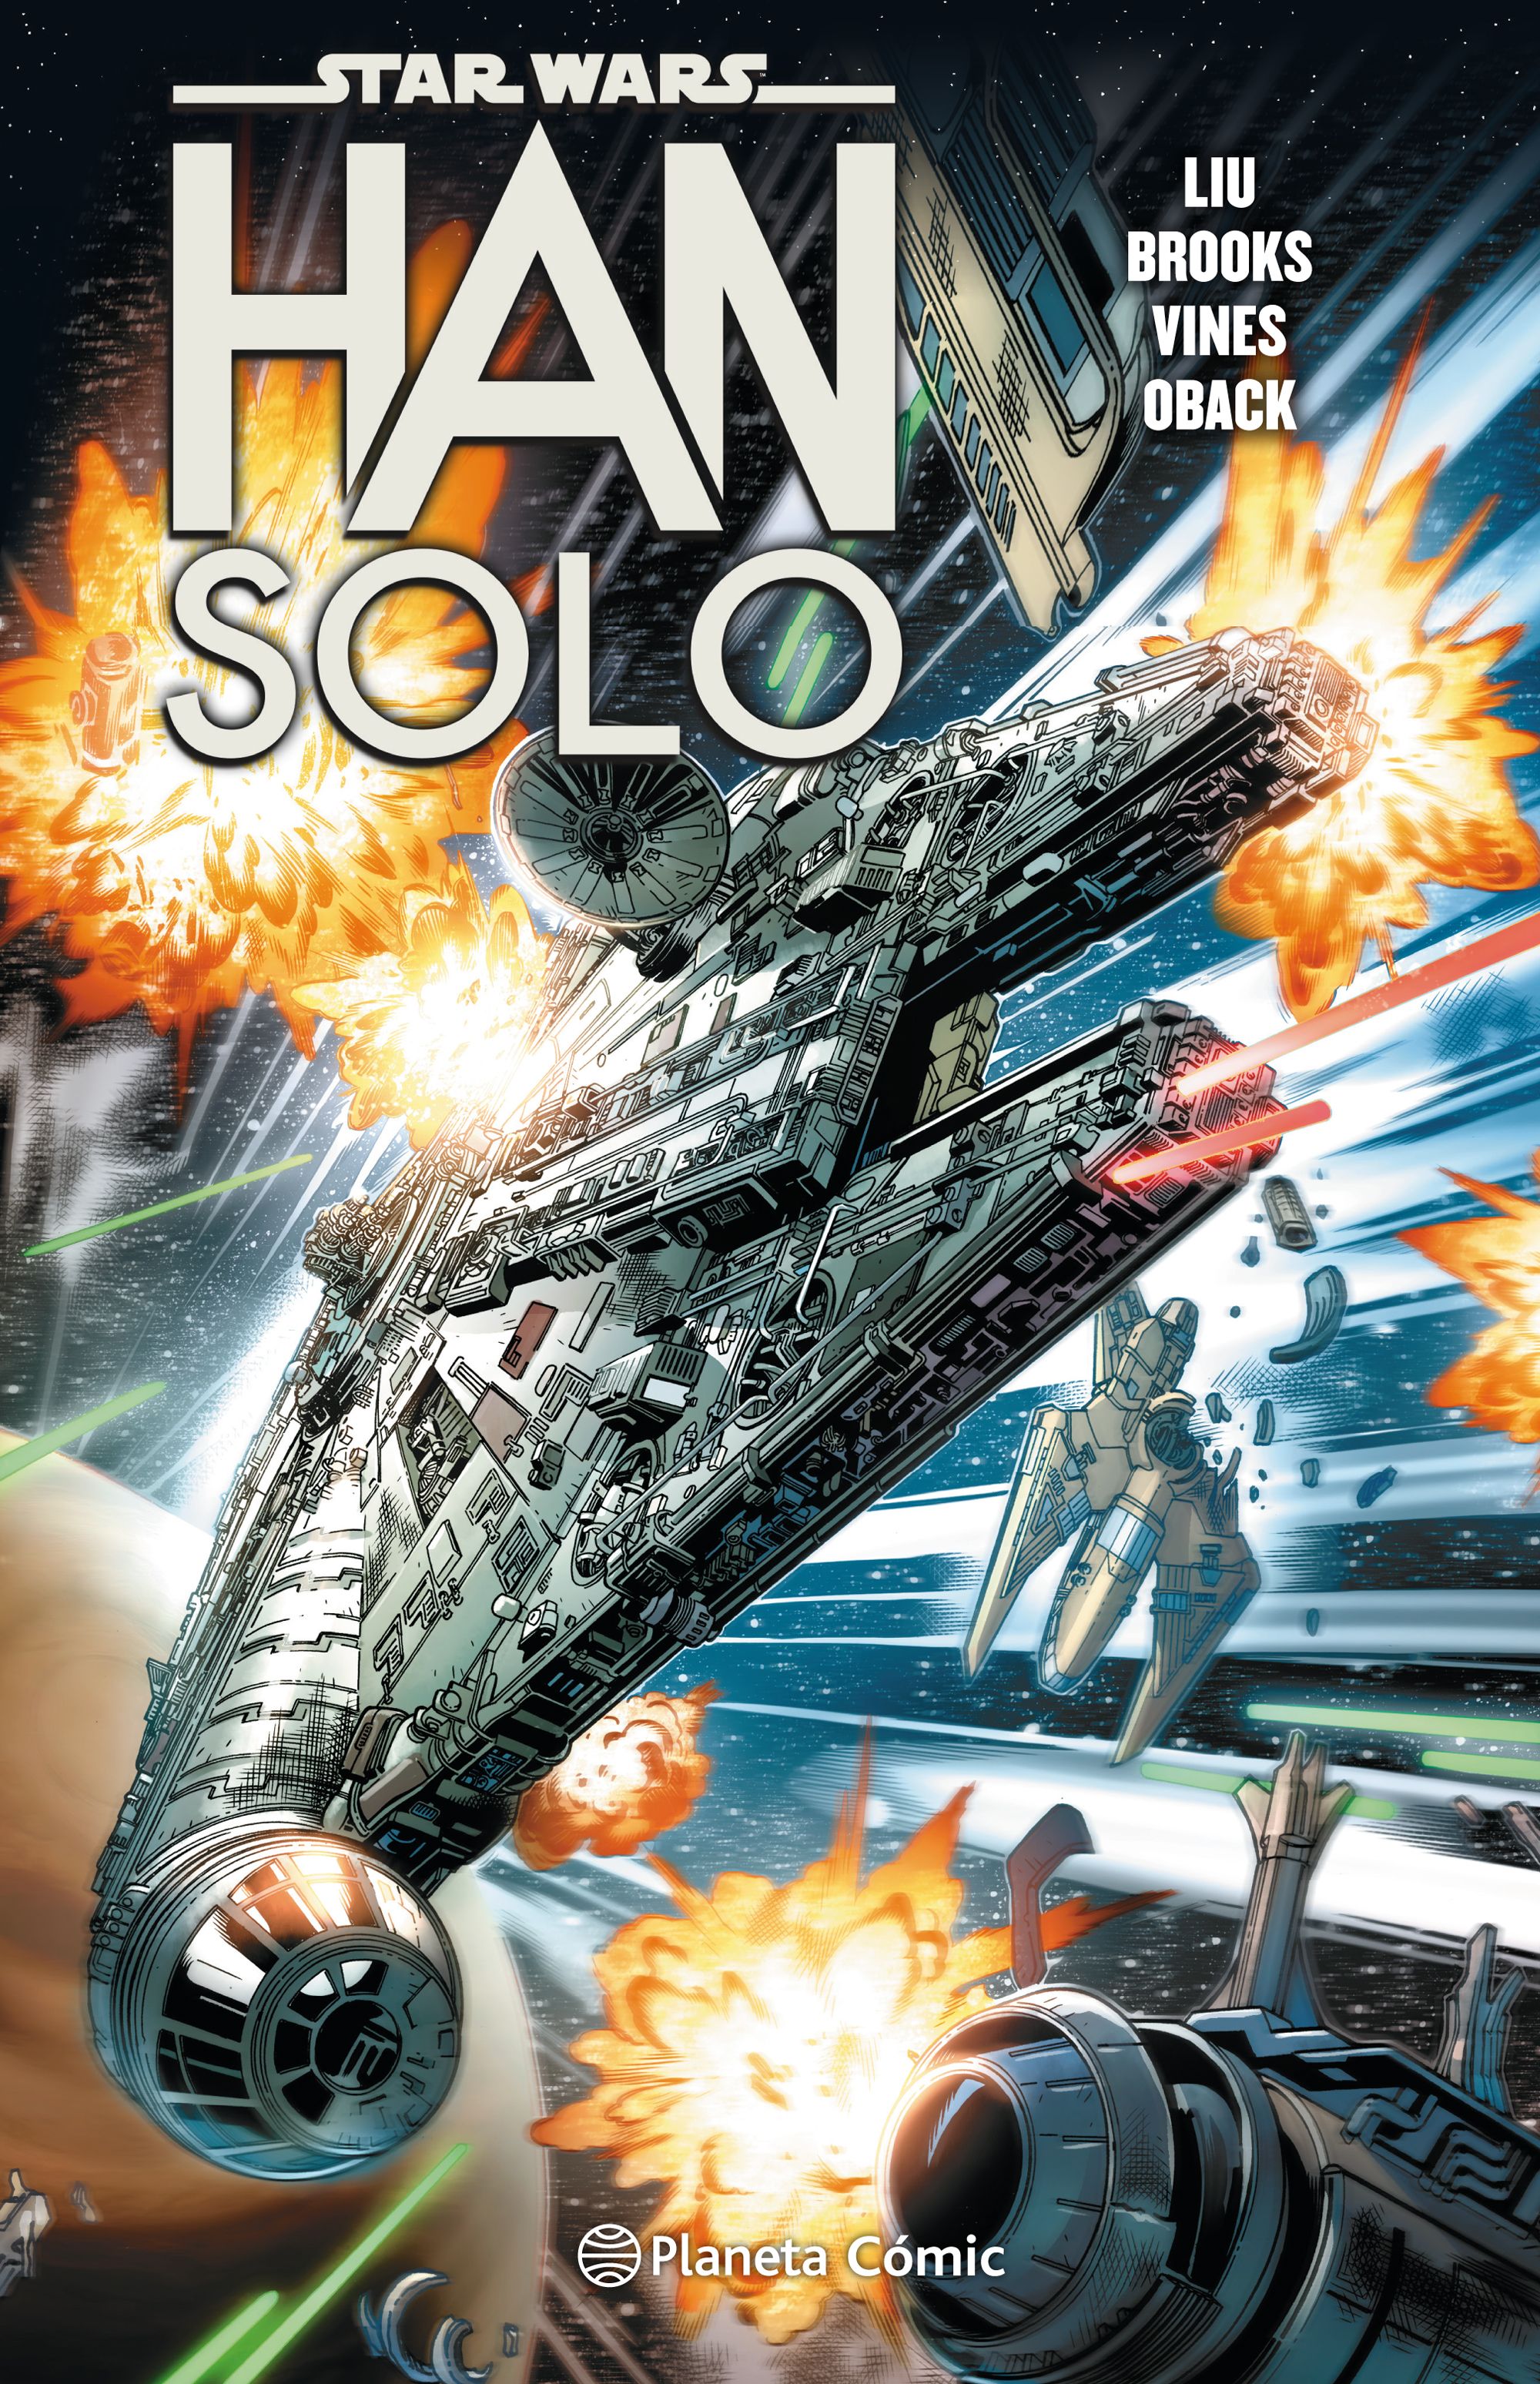 Reseña | Star Wars: Han Solo